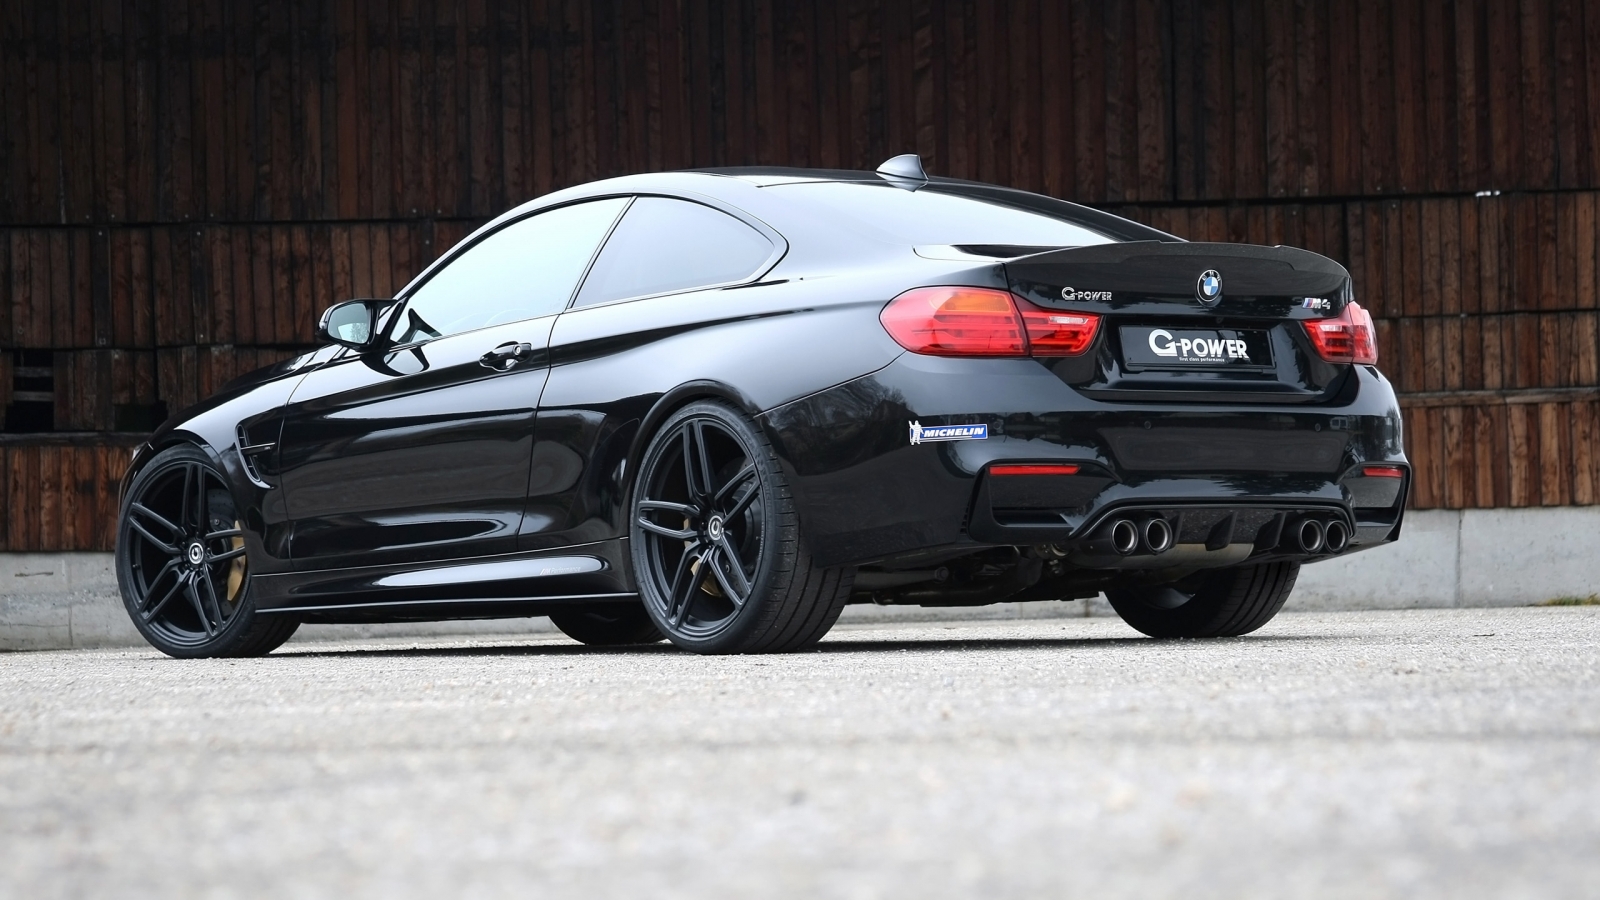 Black BMW M4 G-Power 2014 Rear for 1600 x 900 HDTV resolution